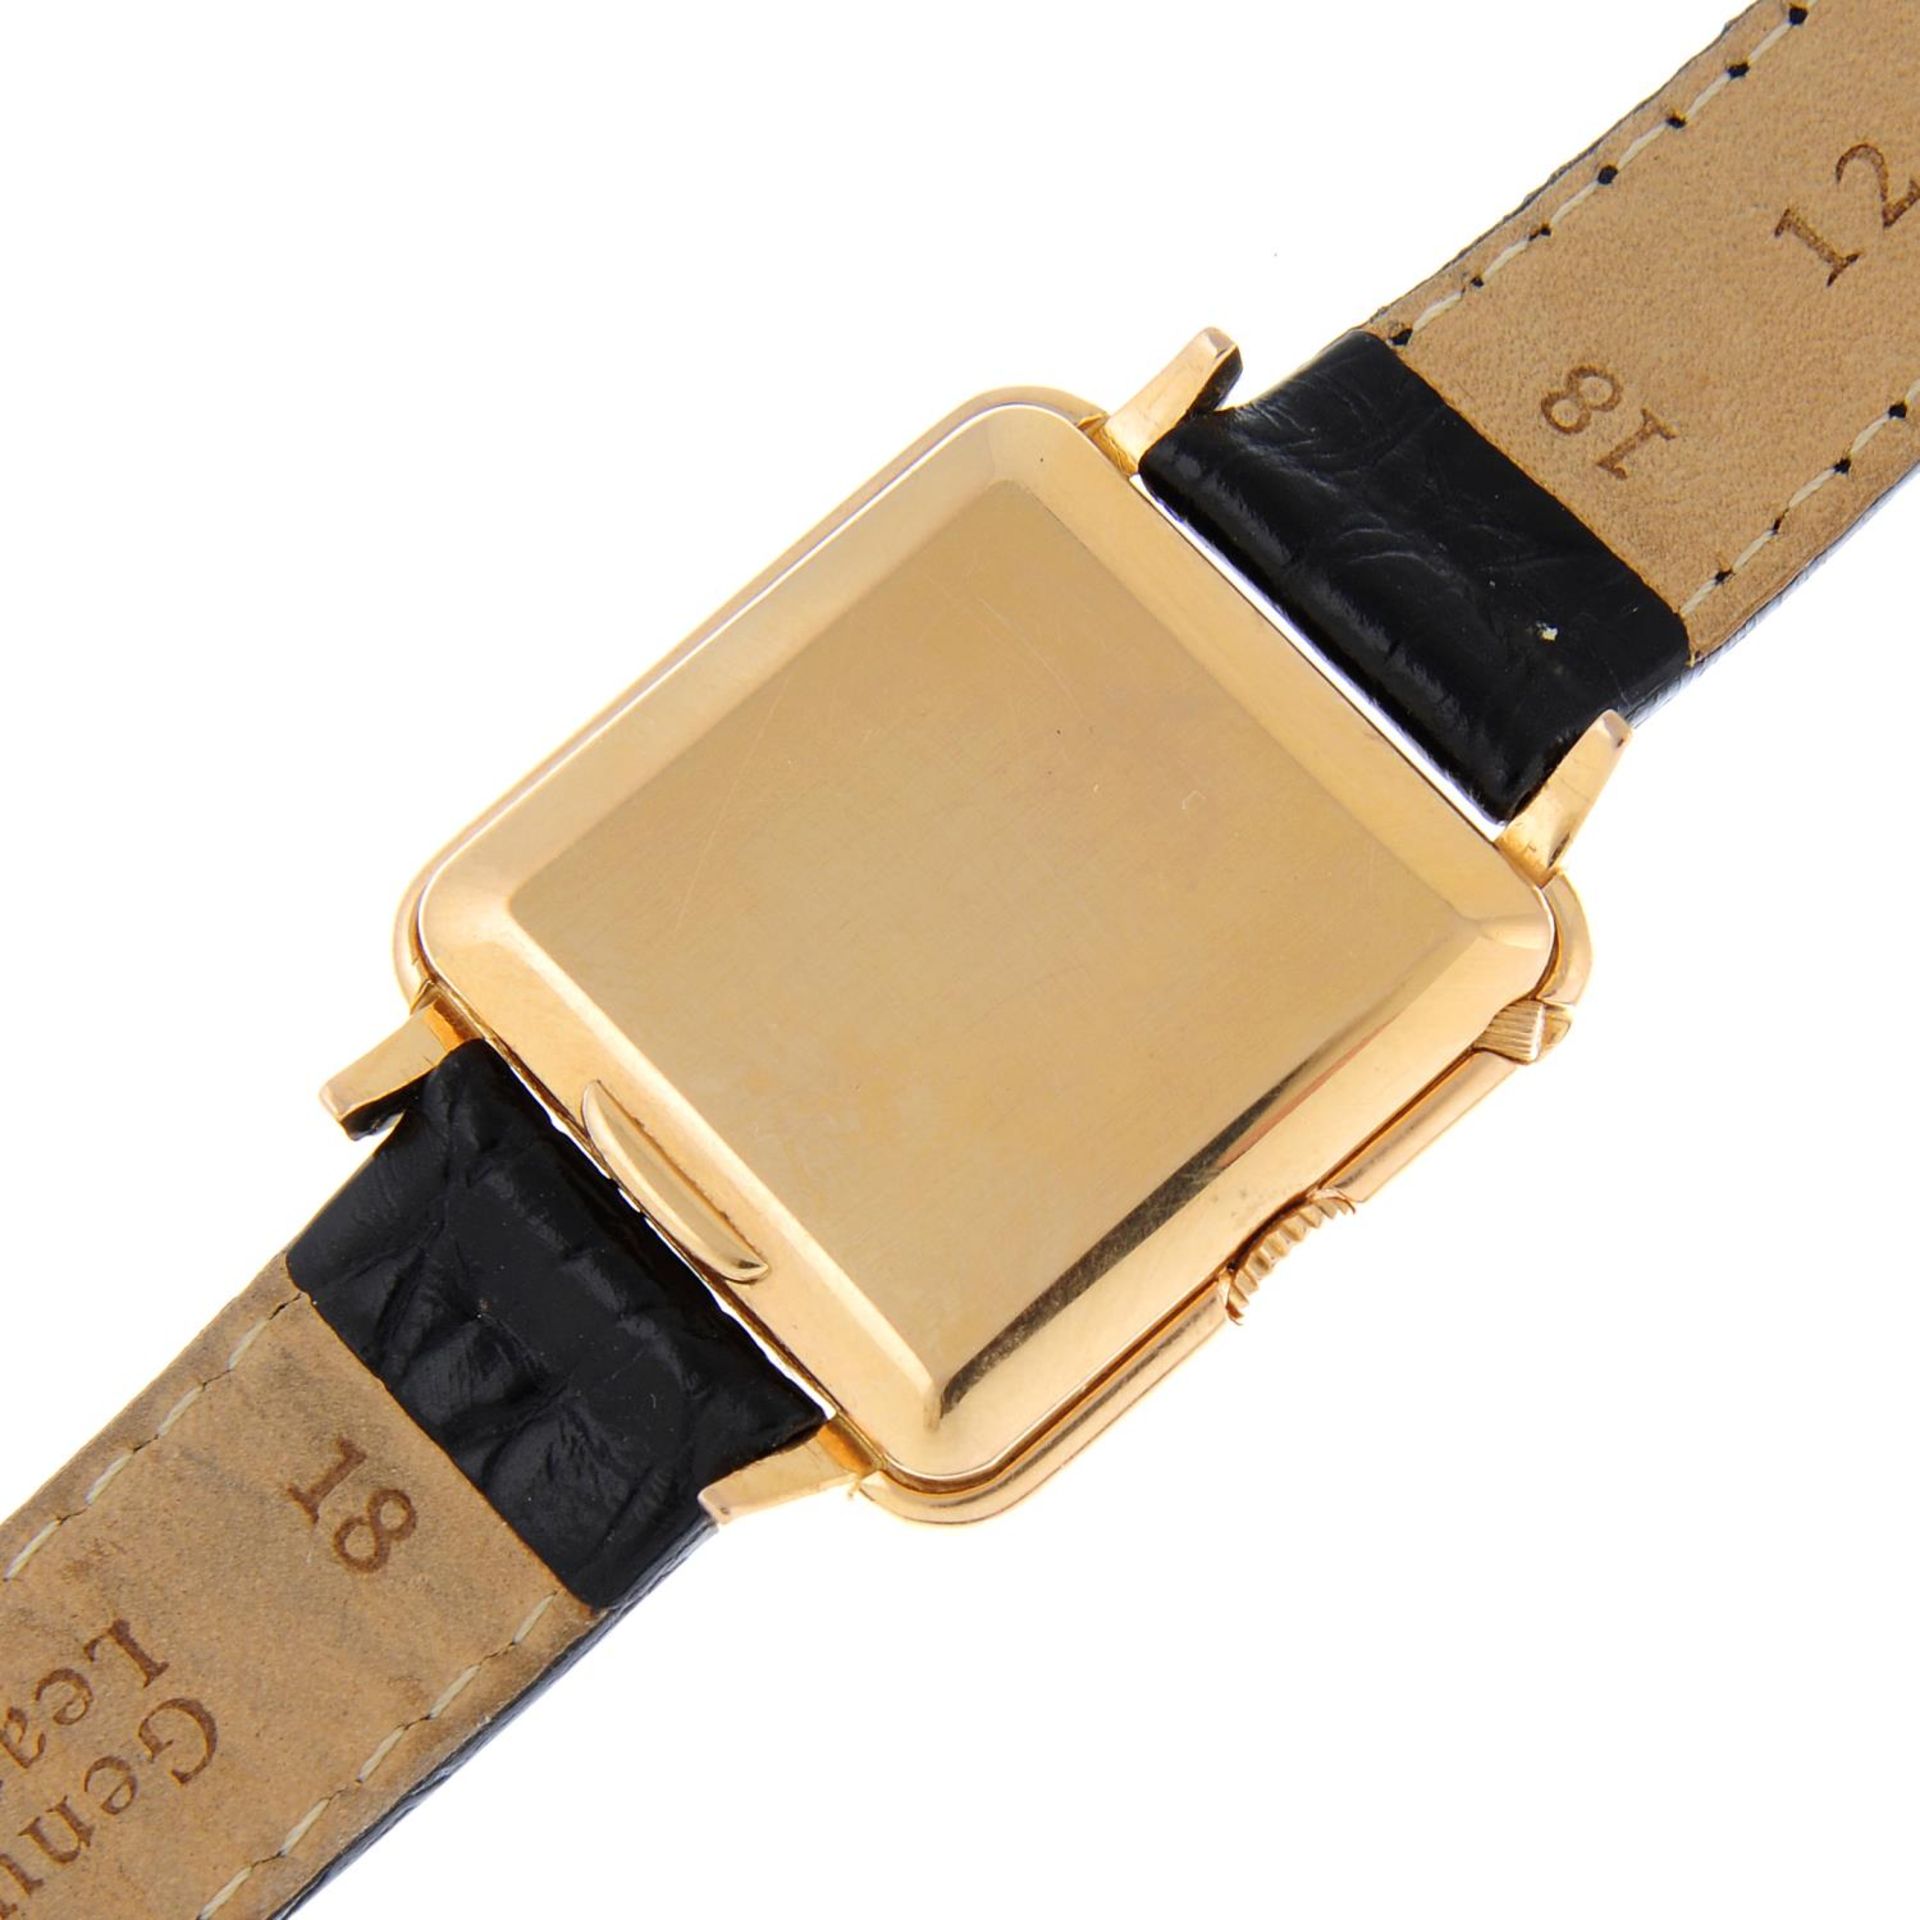 MOVADO - a gentleman's wrist watch. - Image 4 of 4